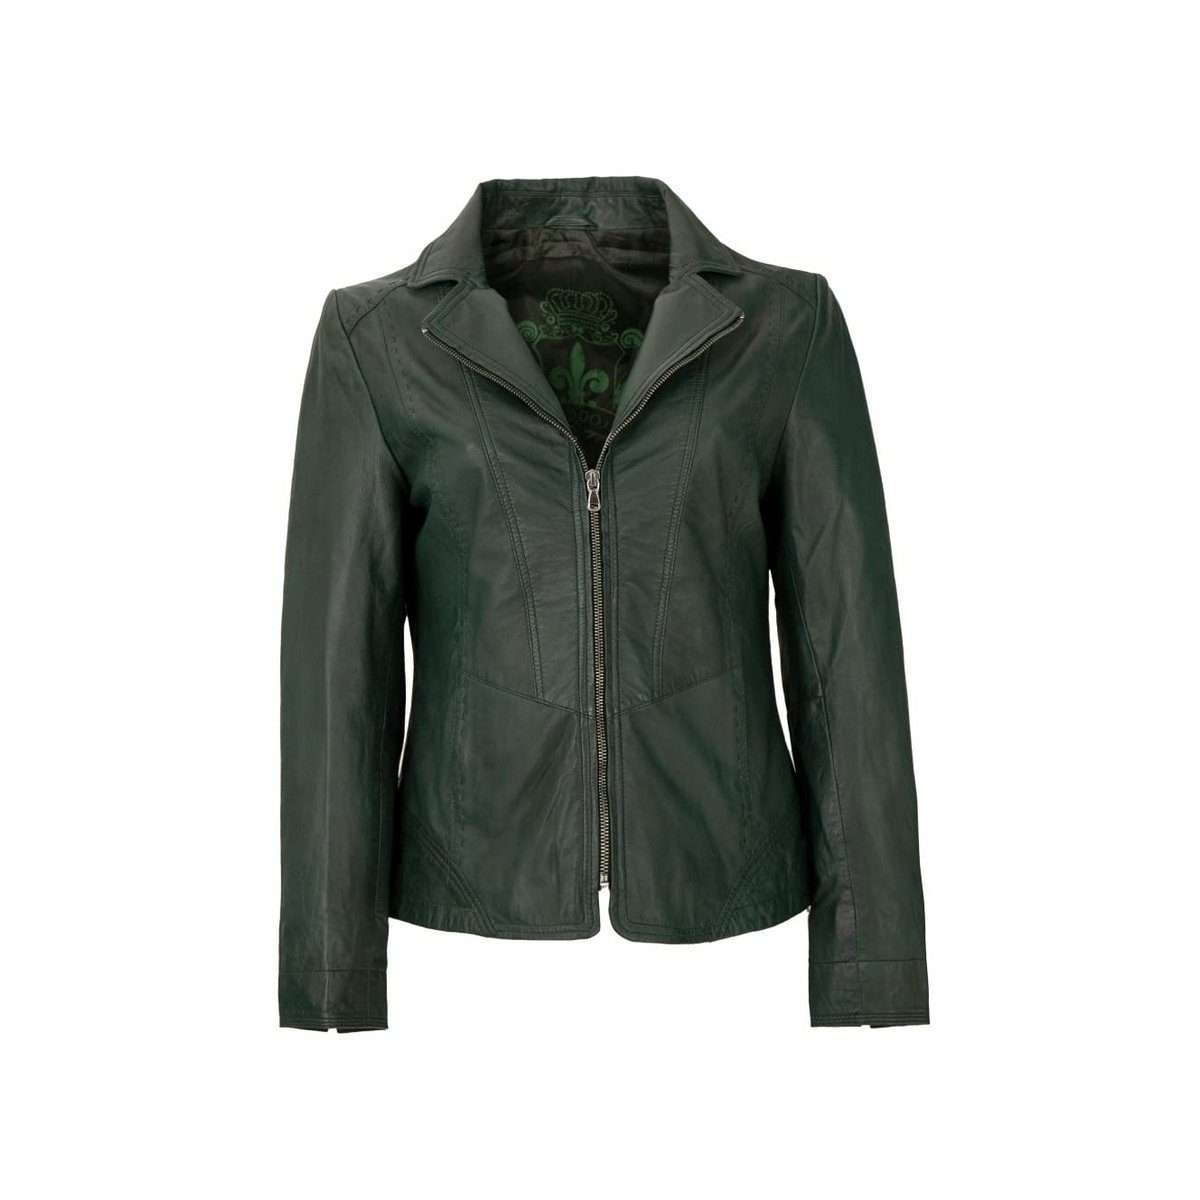 Кожаная куртка Ford-bottle-LN.Детройт натуральная кожа женская кожаная куртка блейзер наппа цвета ягненка бутылочно-зелёный